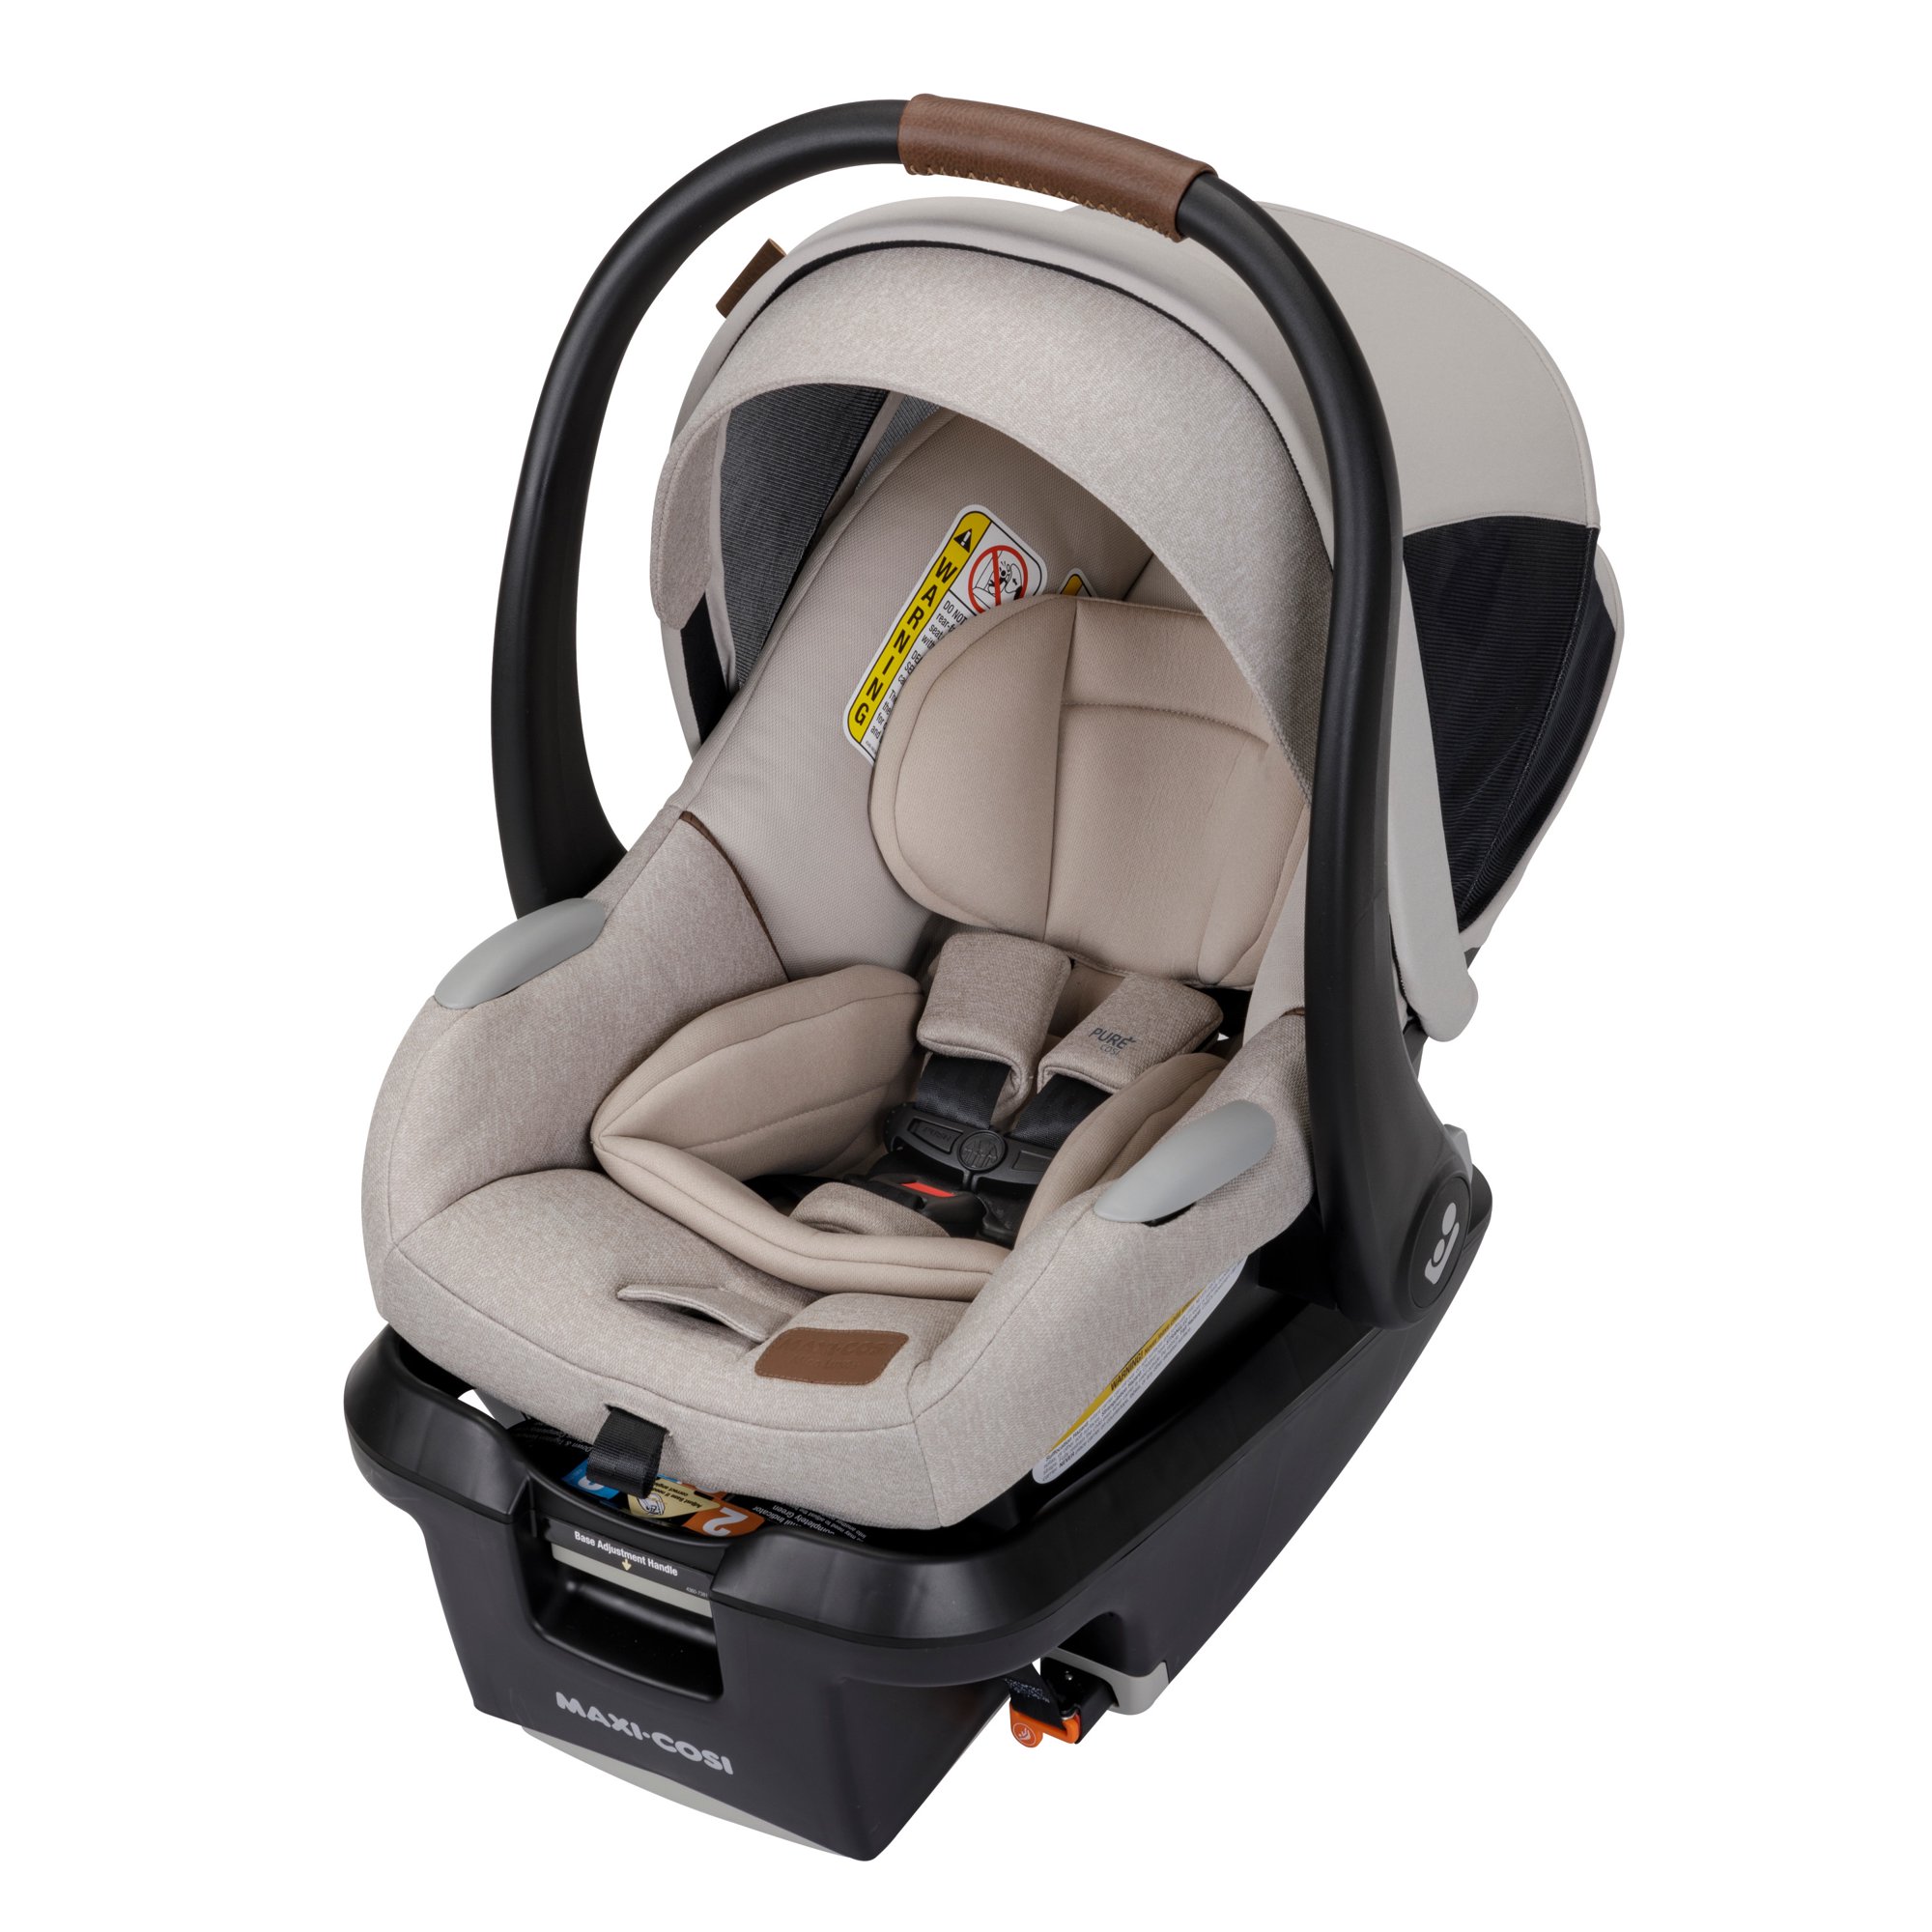 Bevestigen aan snijder duim RECALL: Maxi-Cosi & Safety 1st Infant Car Seats – CarseatBlog